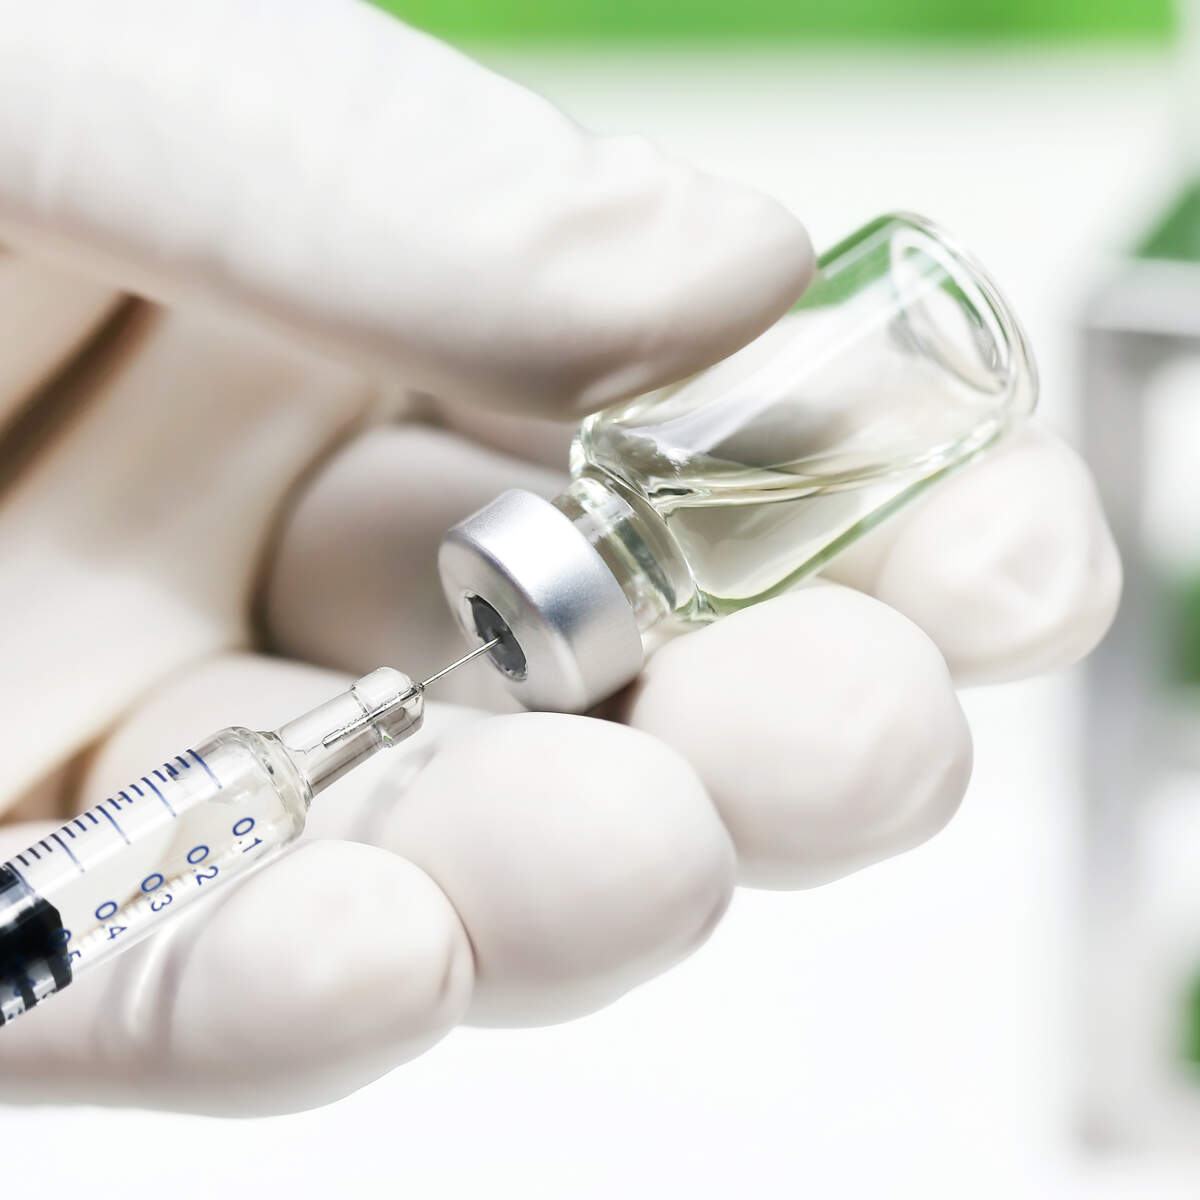 Photo of Needle inserted into vaccine bottle